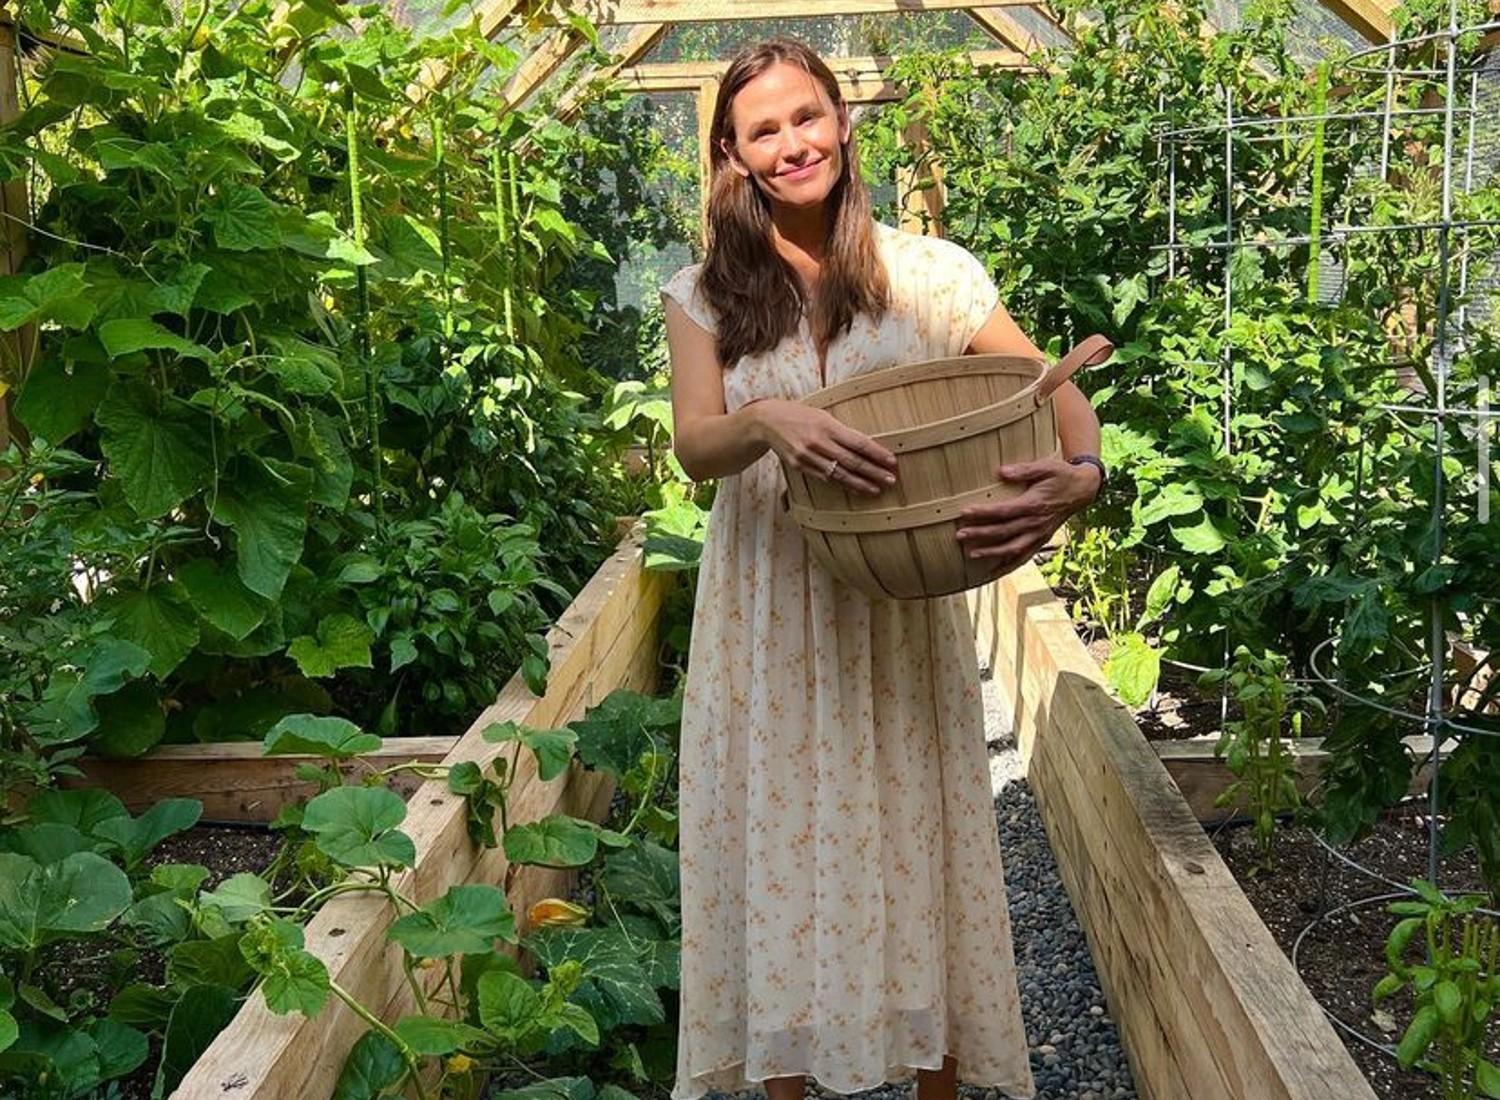 Jennifer Garner with a basket surrounded by her garden.